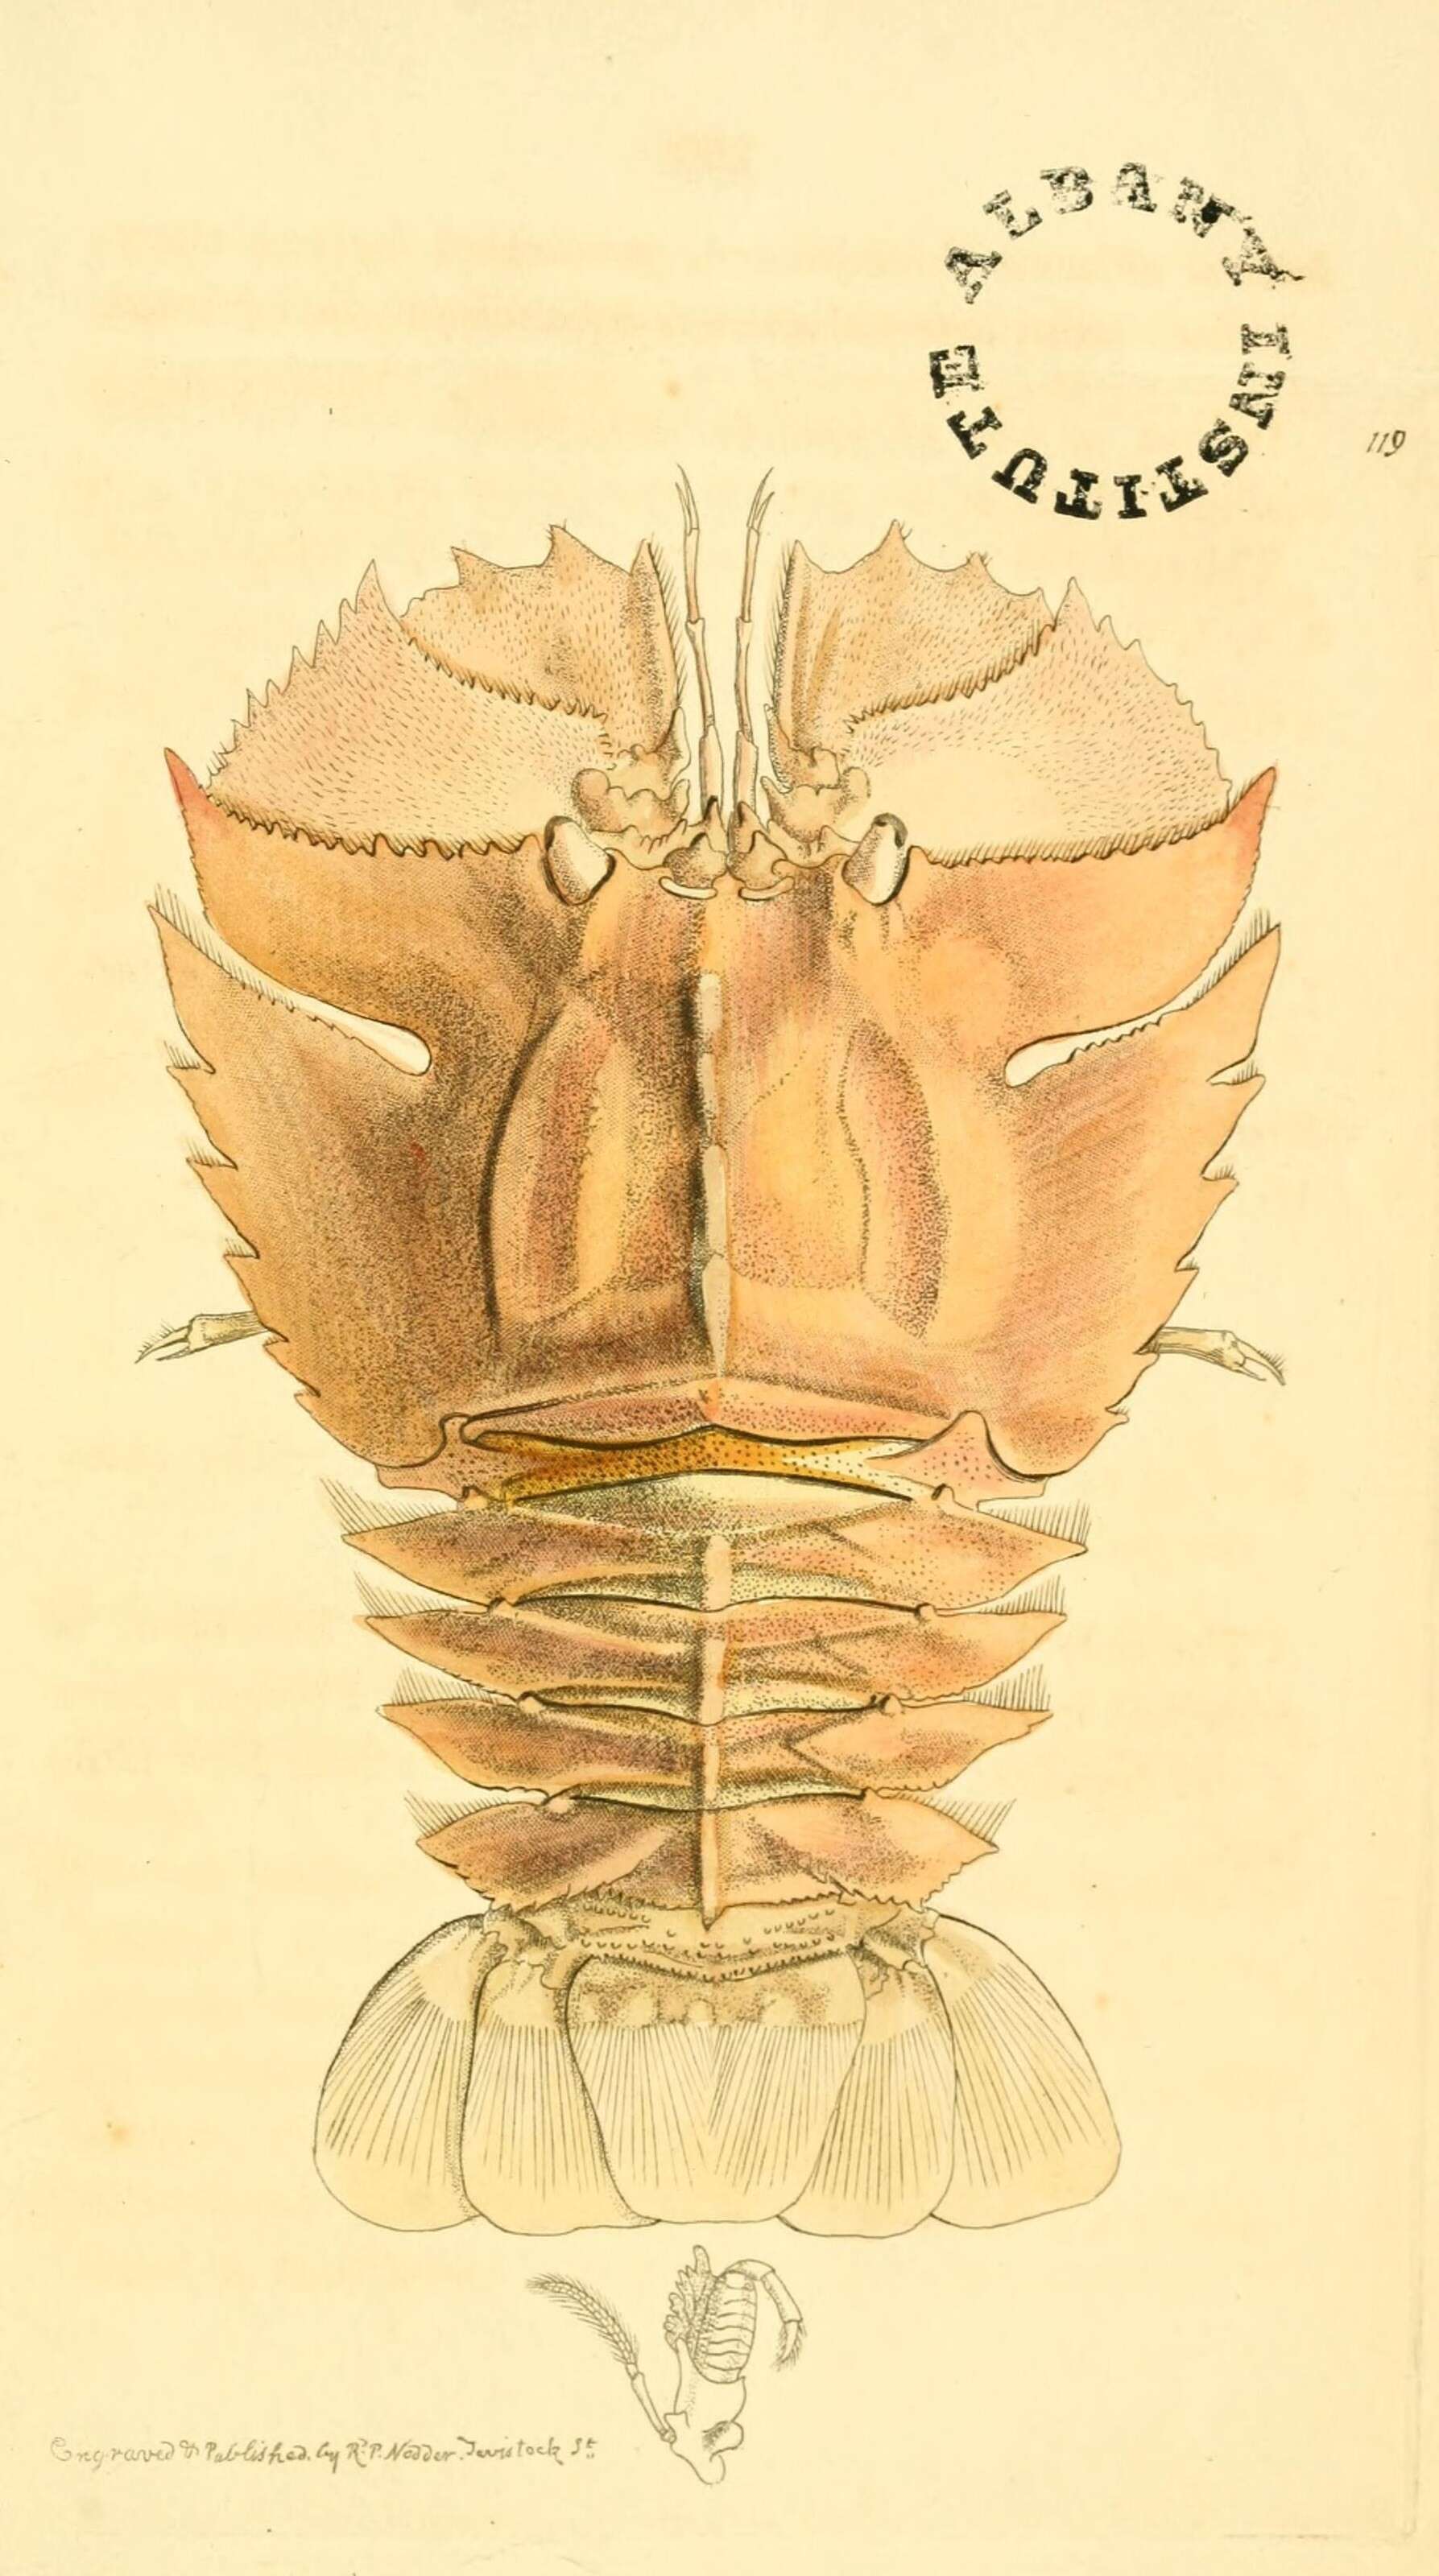 Image de Ibacus peronii Leach 1815